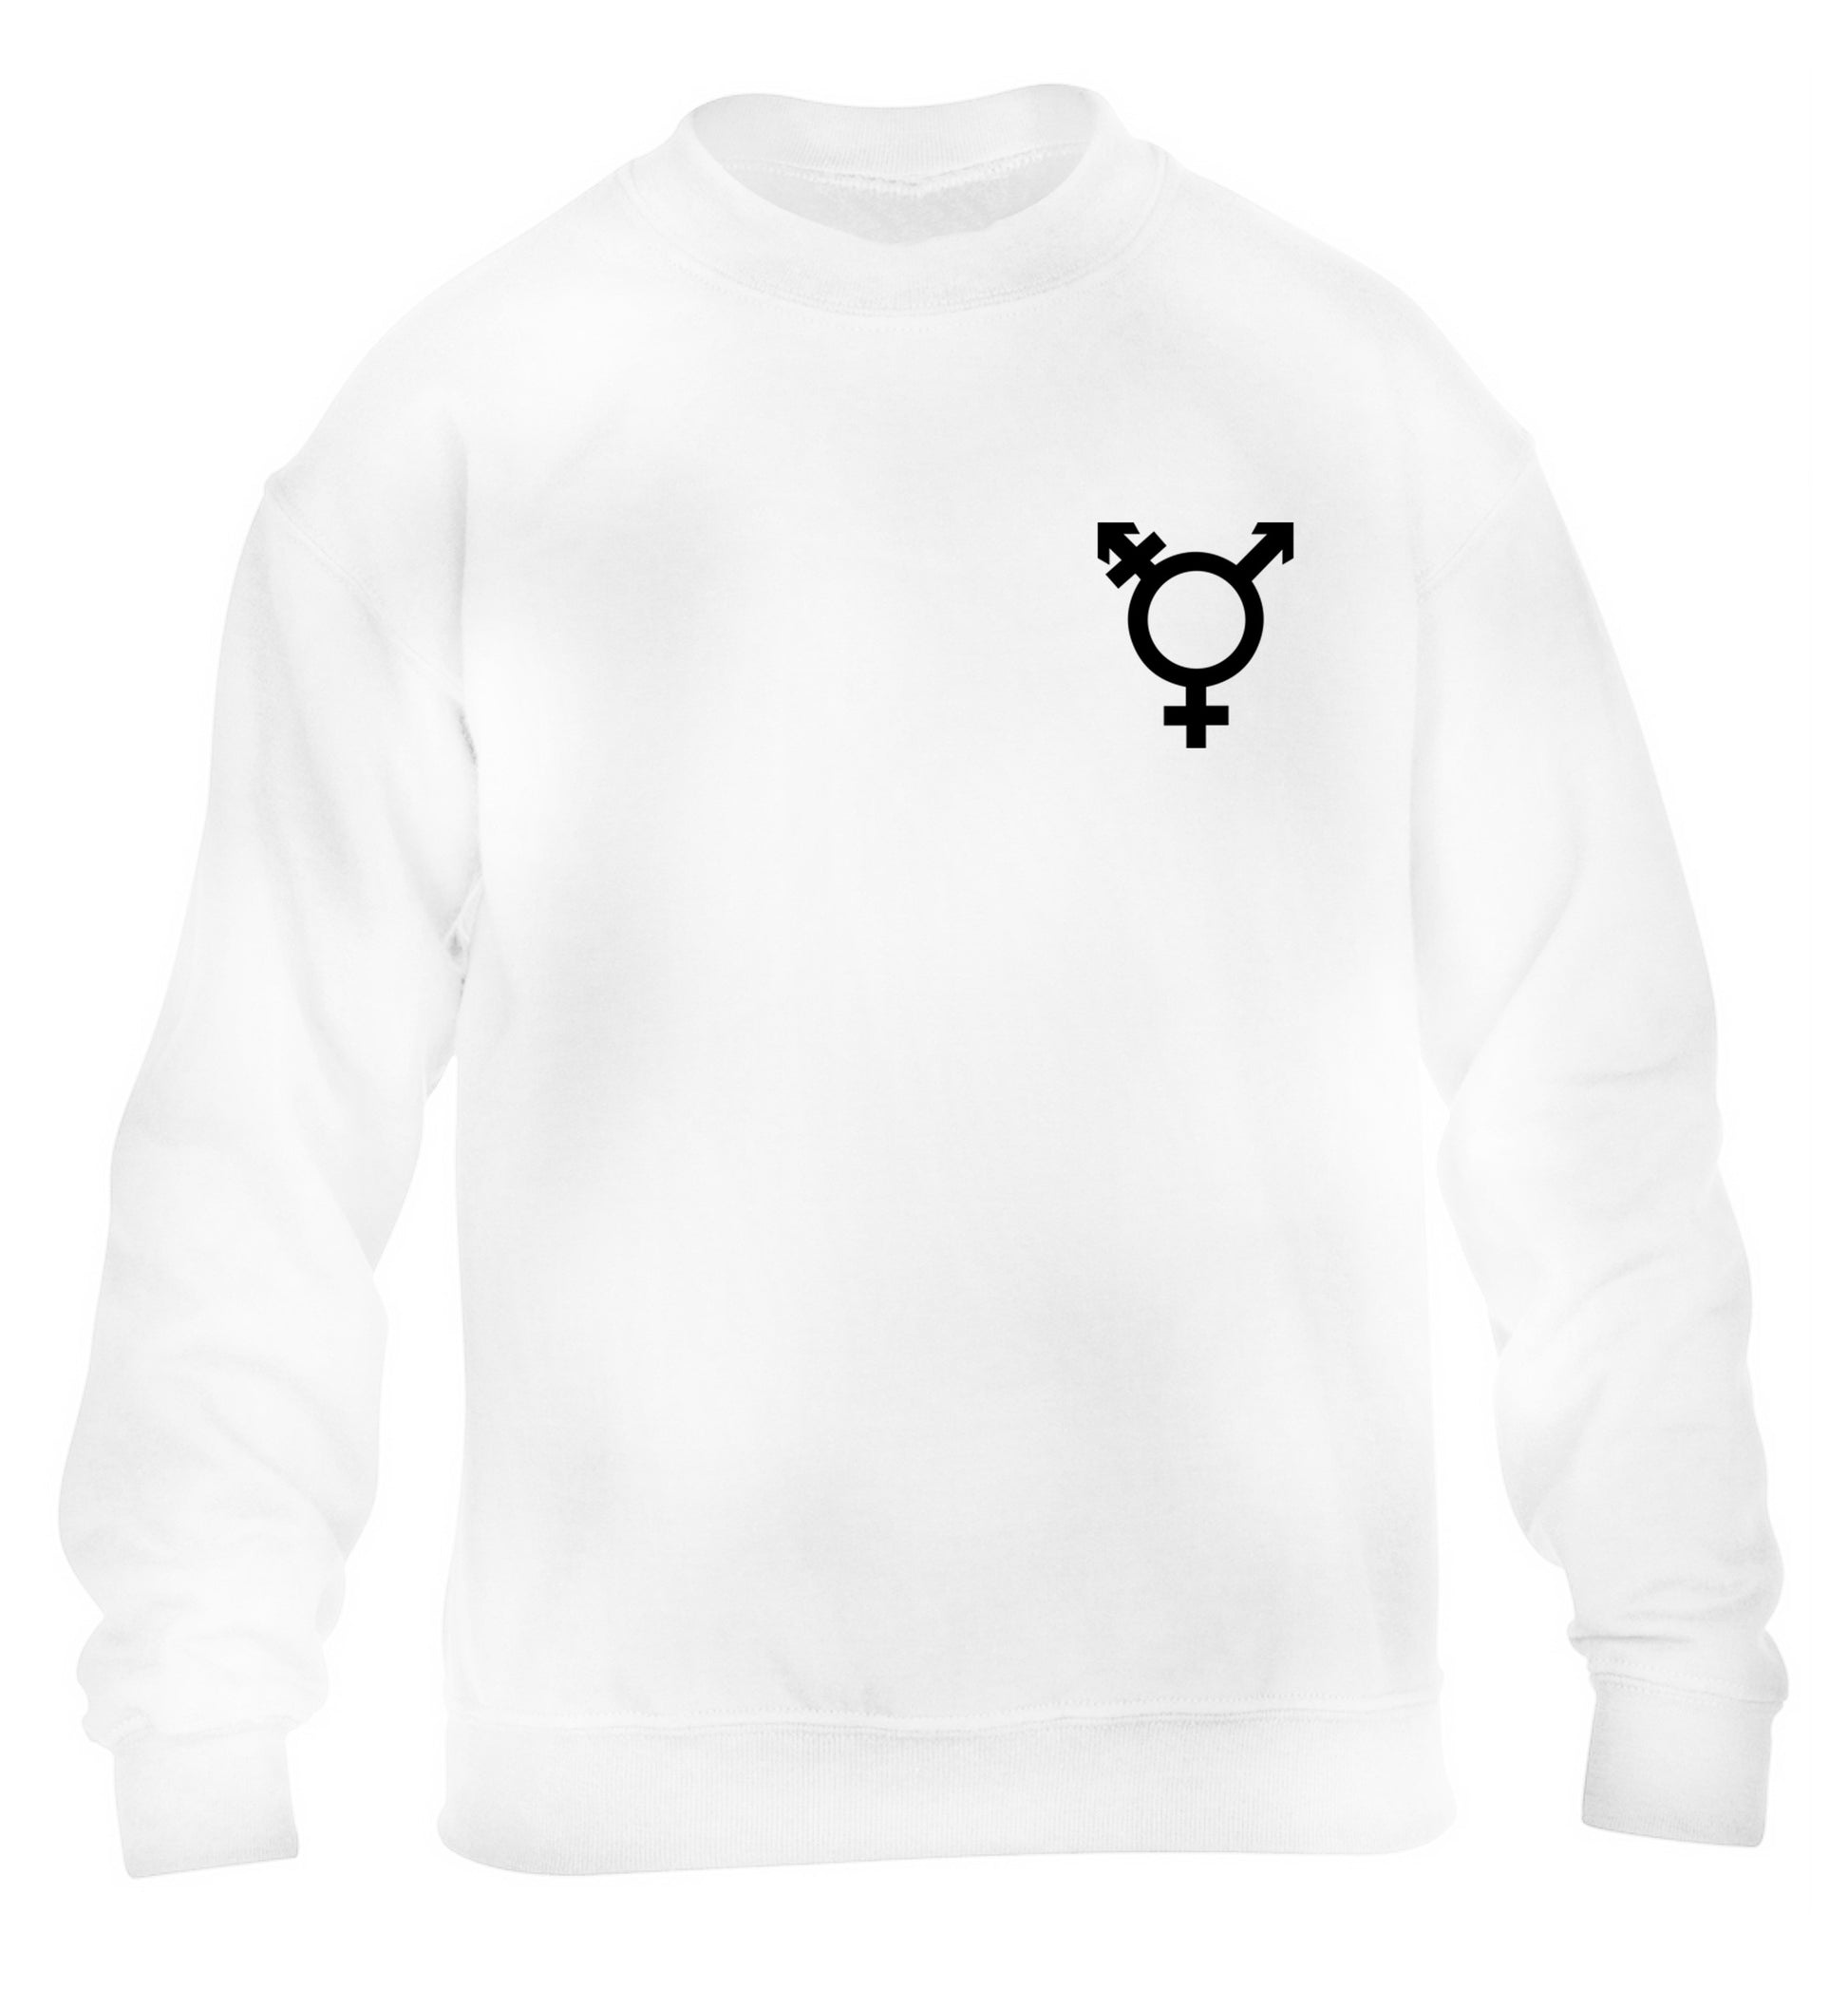 Trans gender symbol pocket children's white sweater 12-14 Years